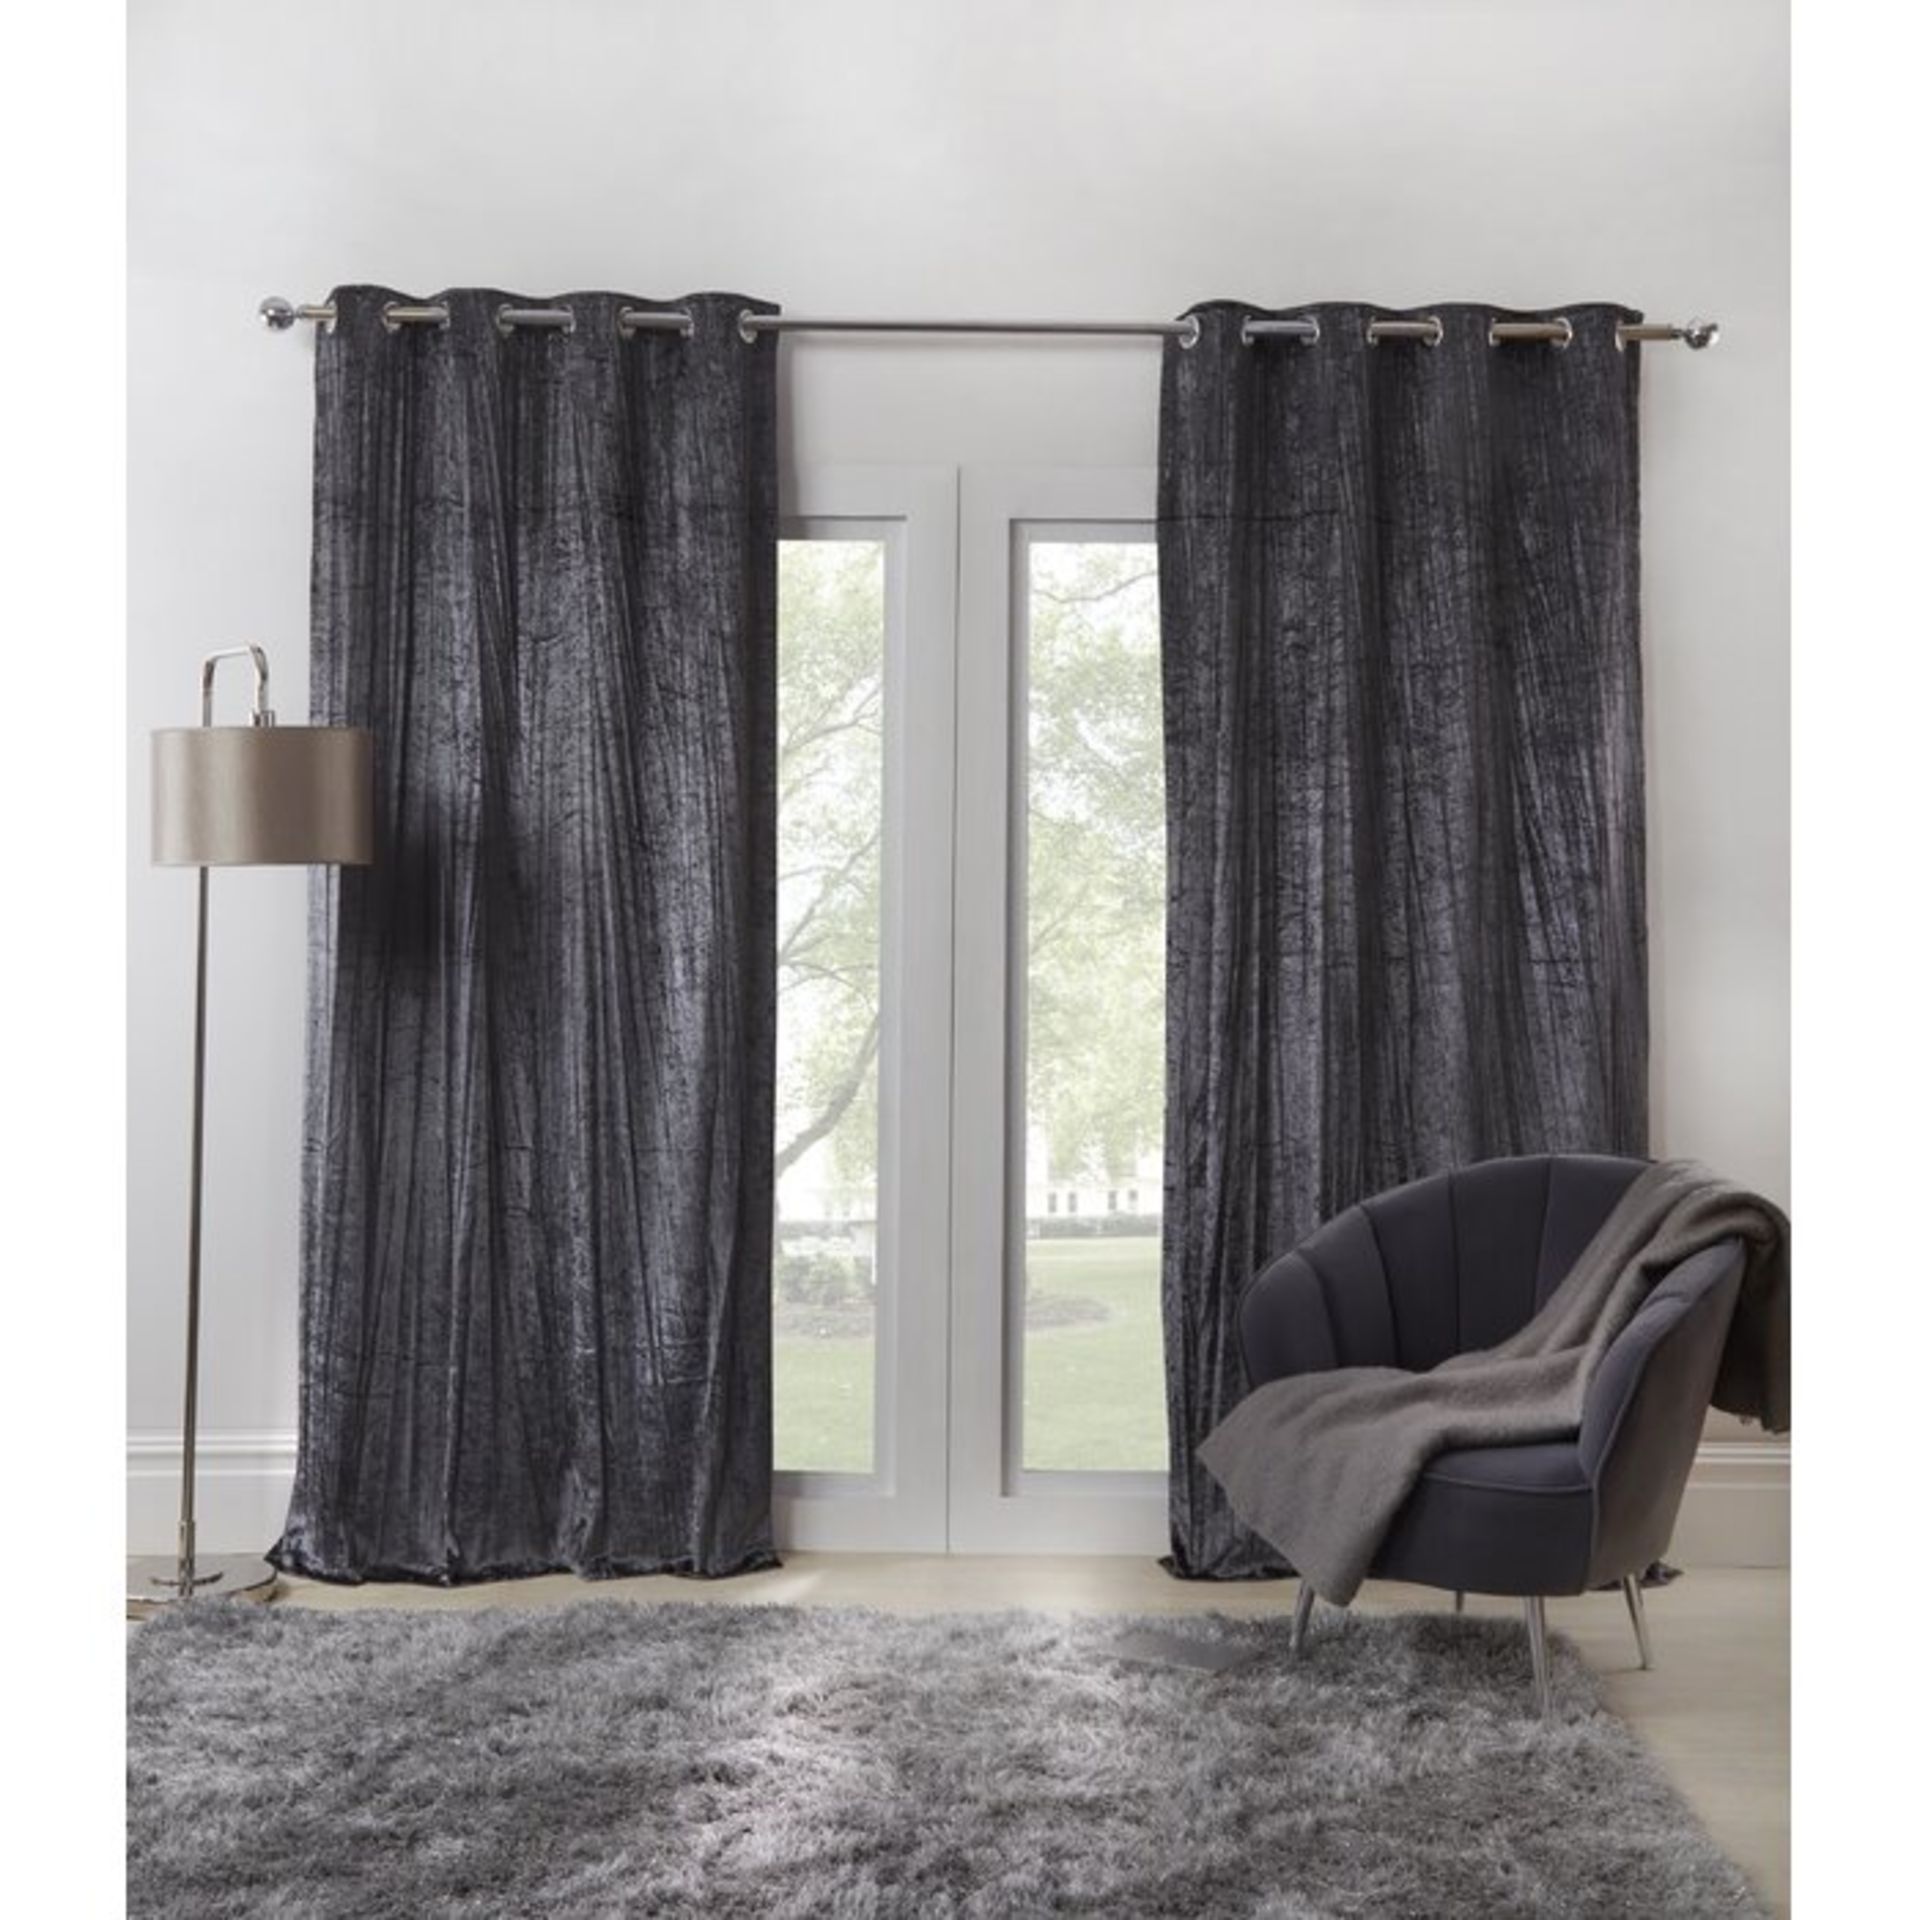 Crenwick Eyelet Room Darkening Curtains (Set of 2) - RRP £97.99